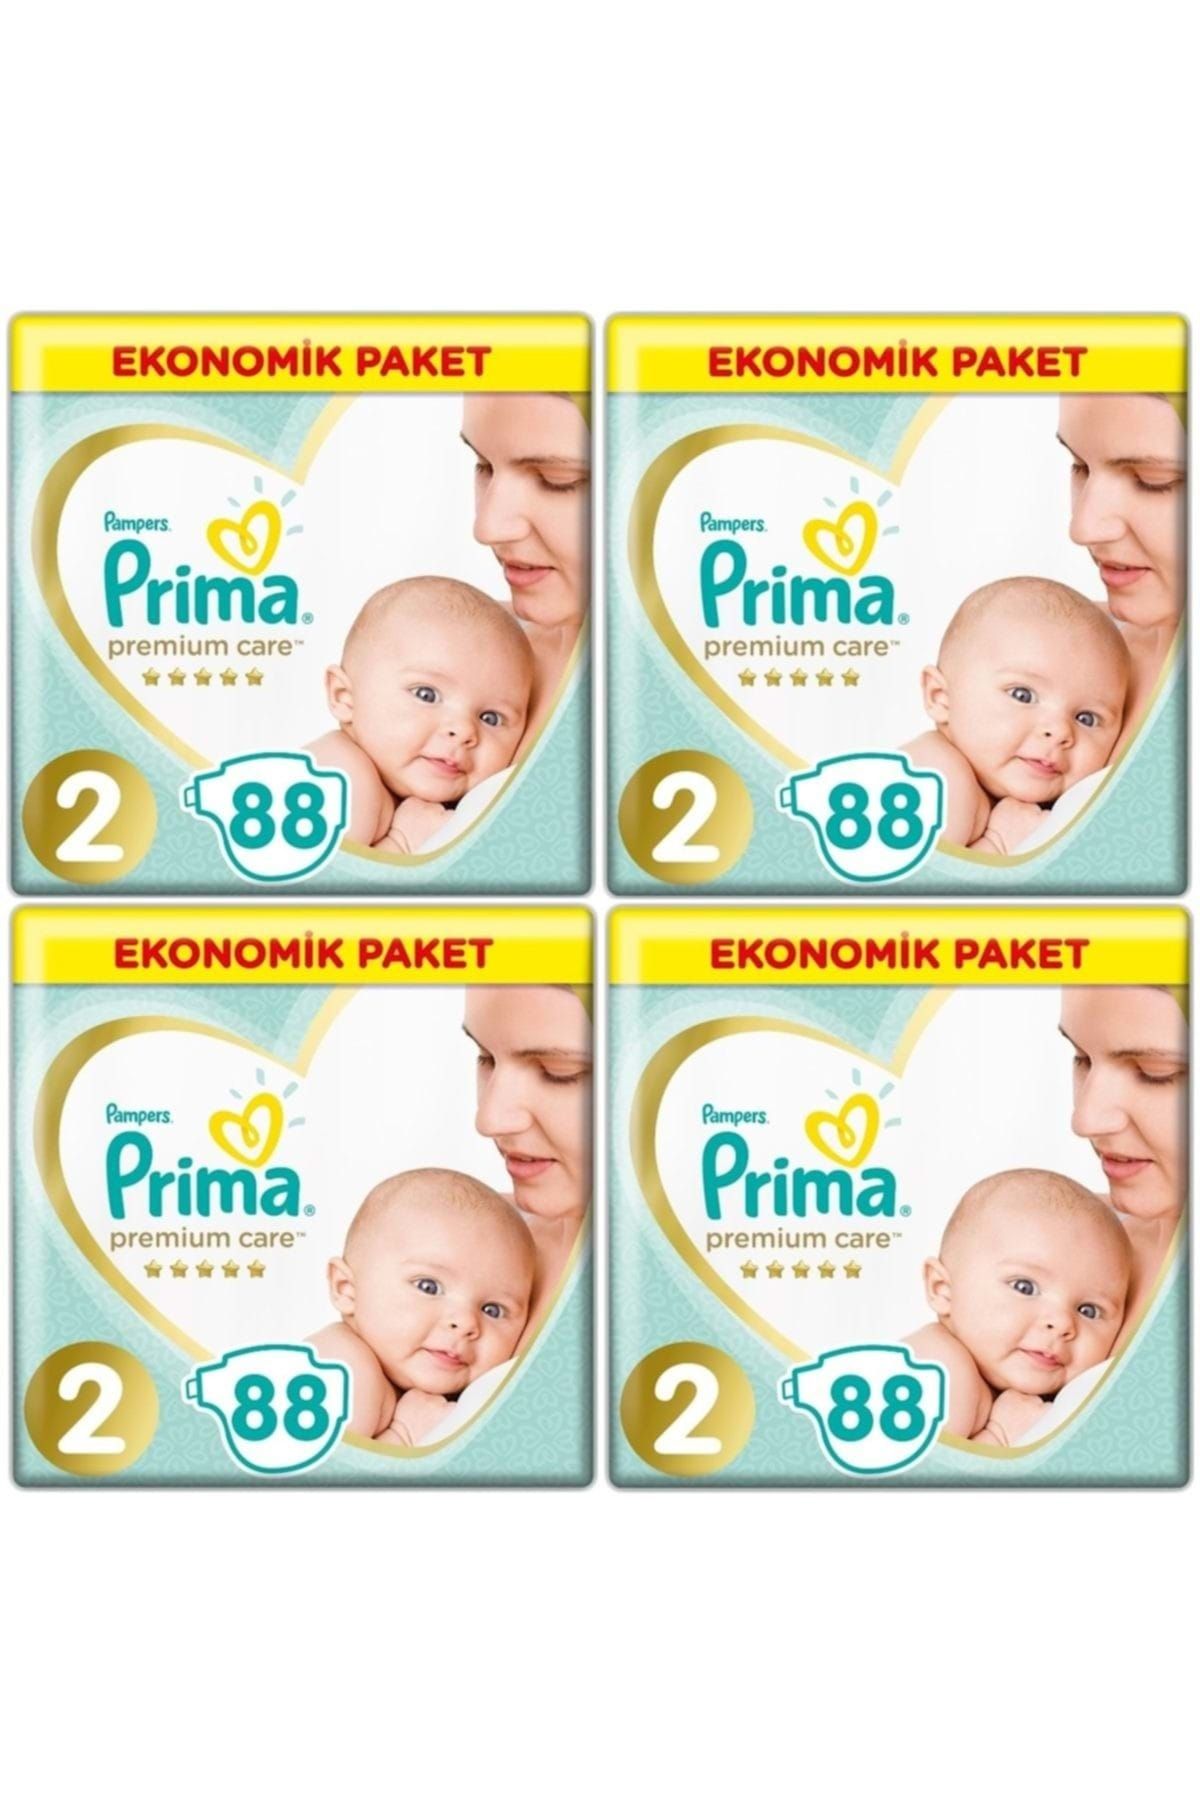 Prima Bebek Bezi Premium Care 4'lü Ekonomik Paket 2 Beden 352 Adet